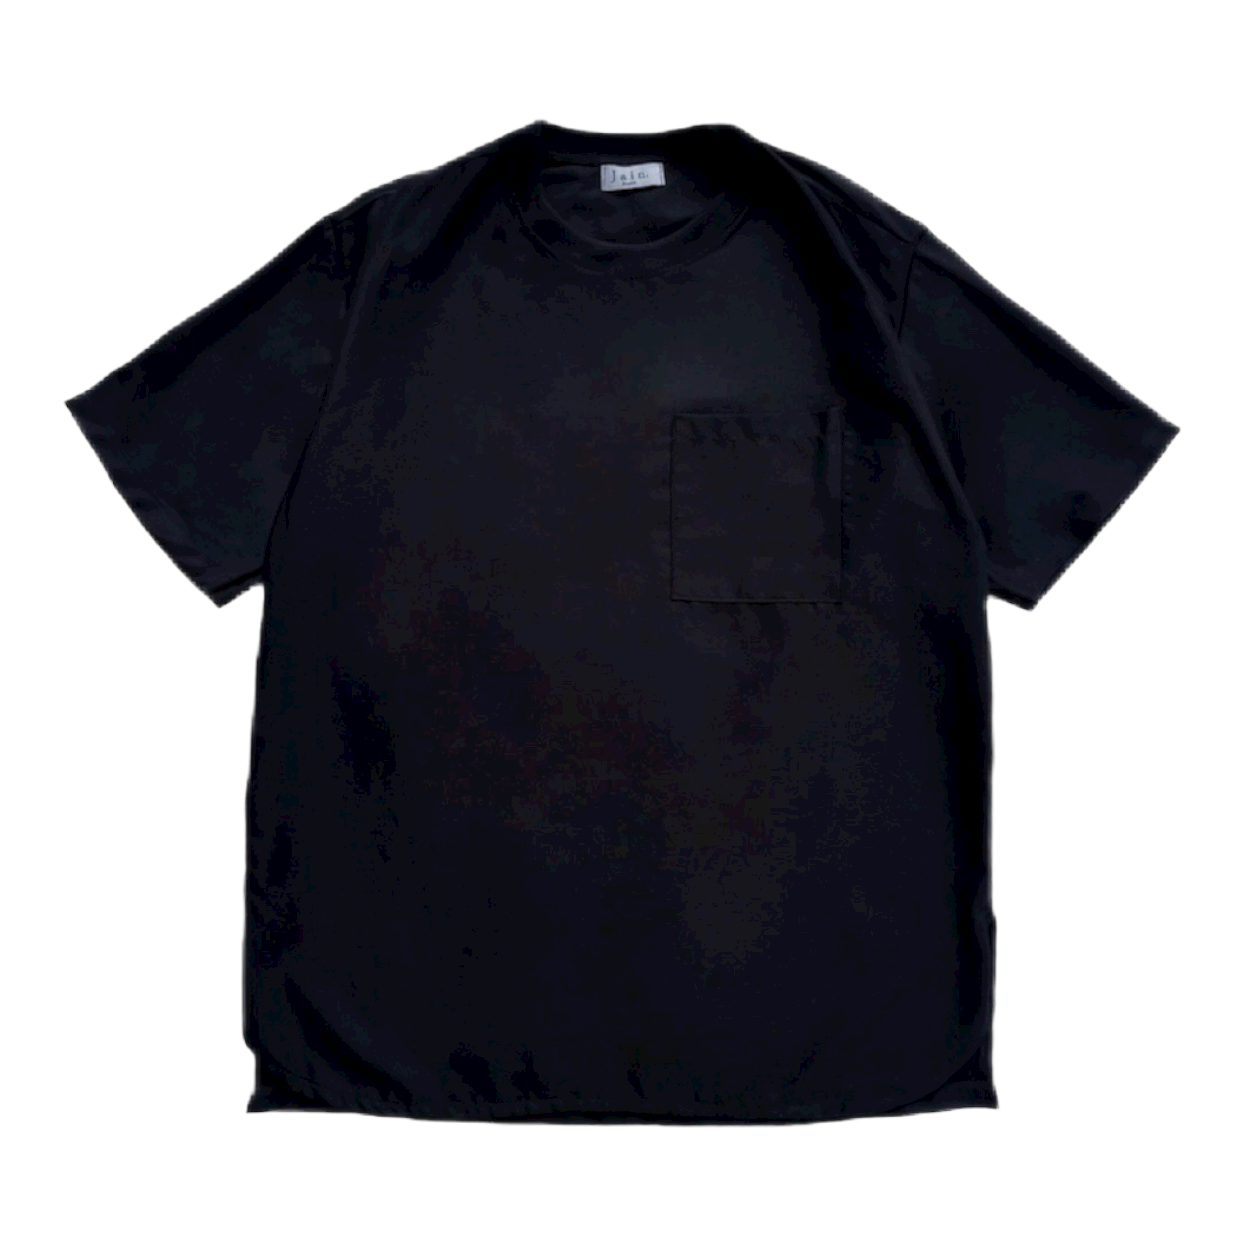 Genji Shirt (Black)